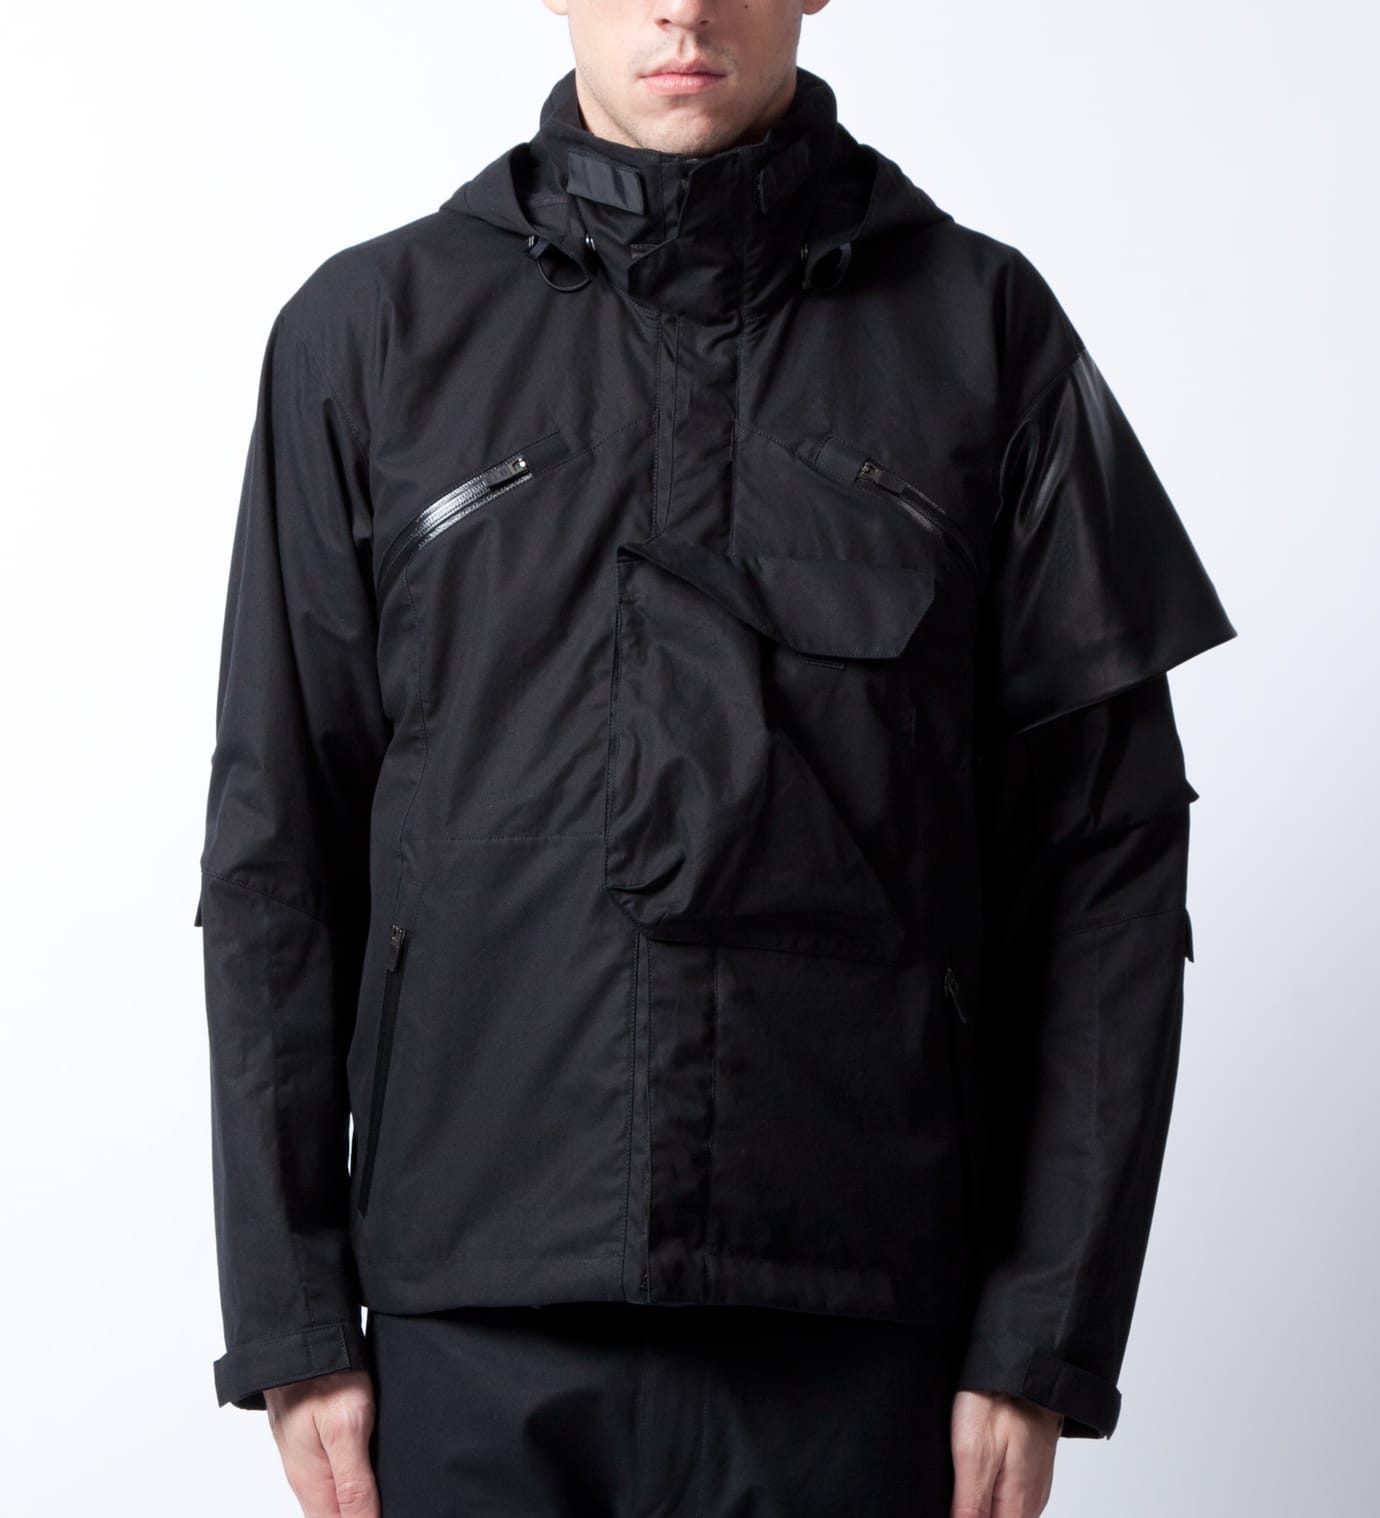 ACRONYM - Black J1A-S Jacket | HBX - Globally Curated Fashion and 